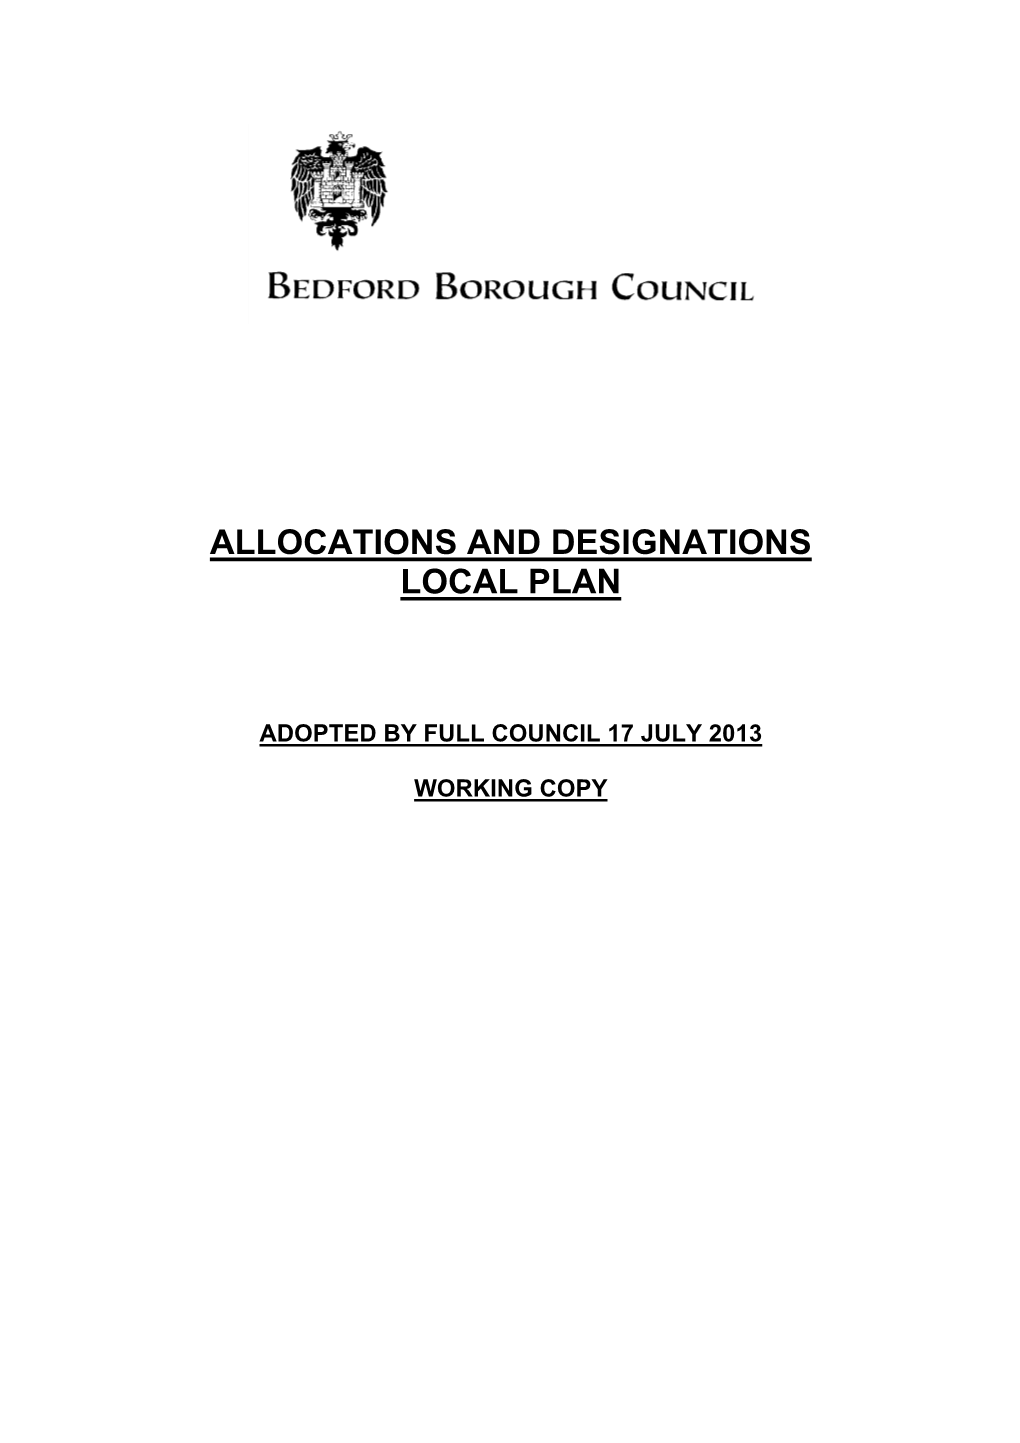 Allocations and Designations Local Plan